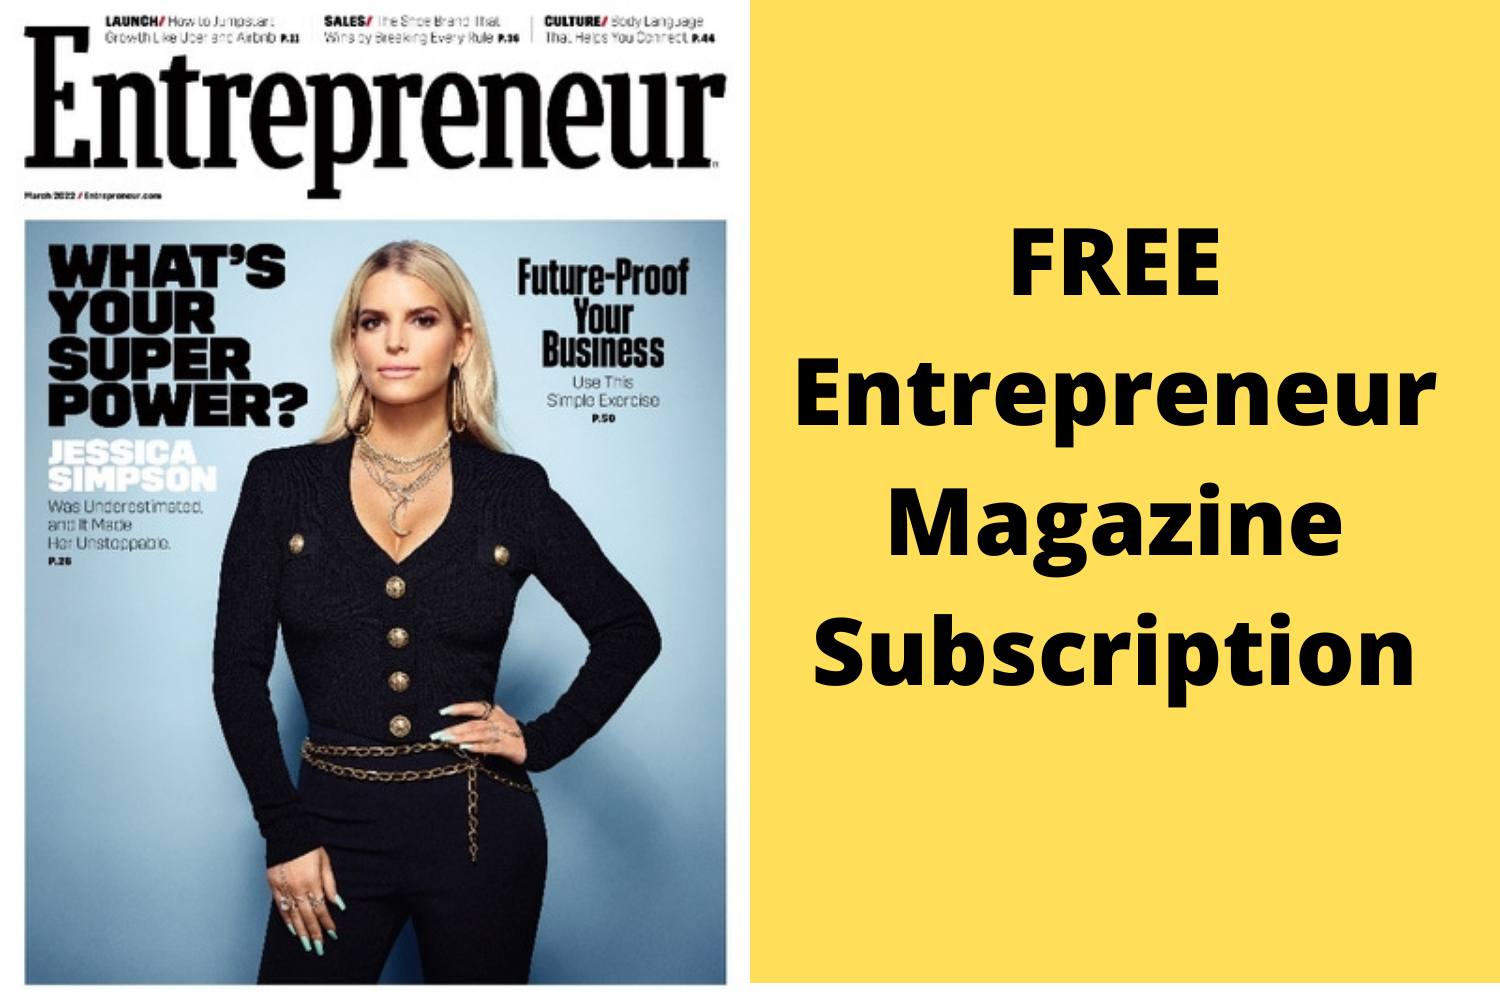 FREE Entrepreneur Magazine Subscription